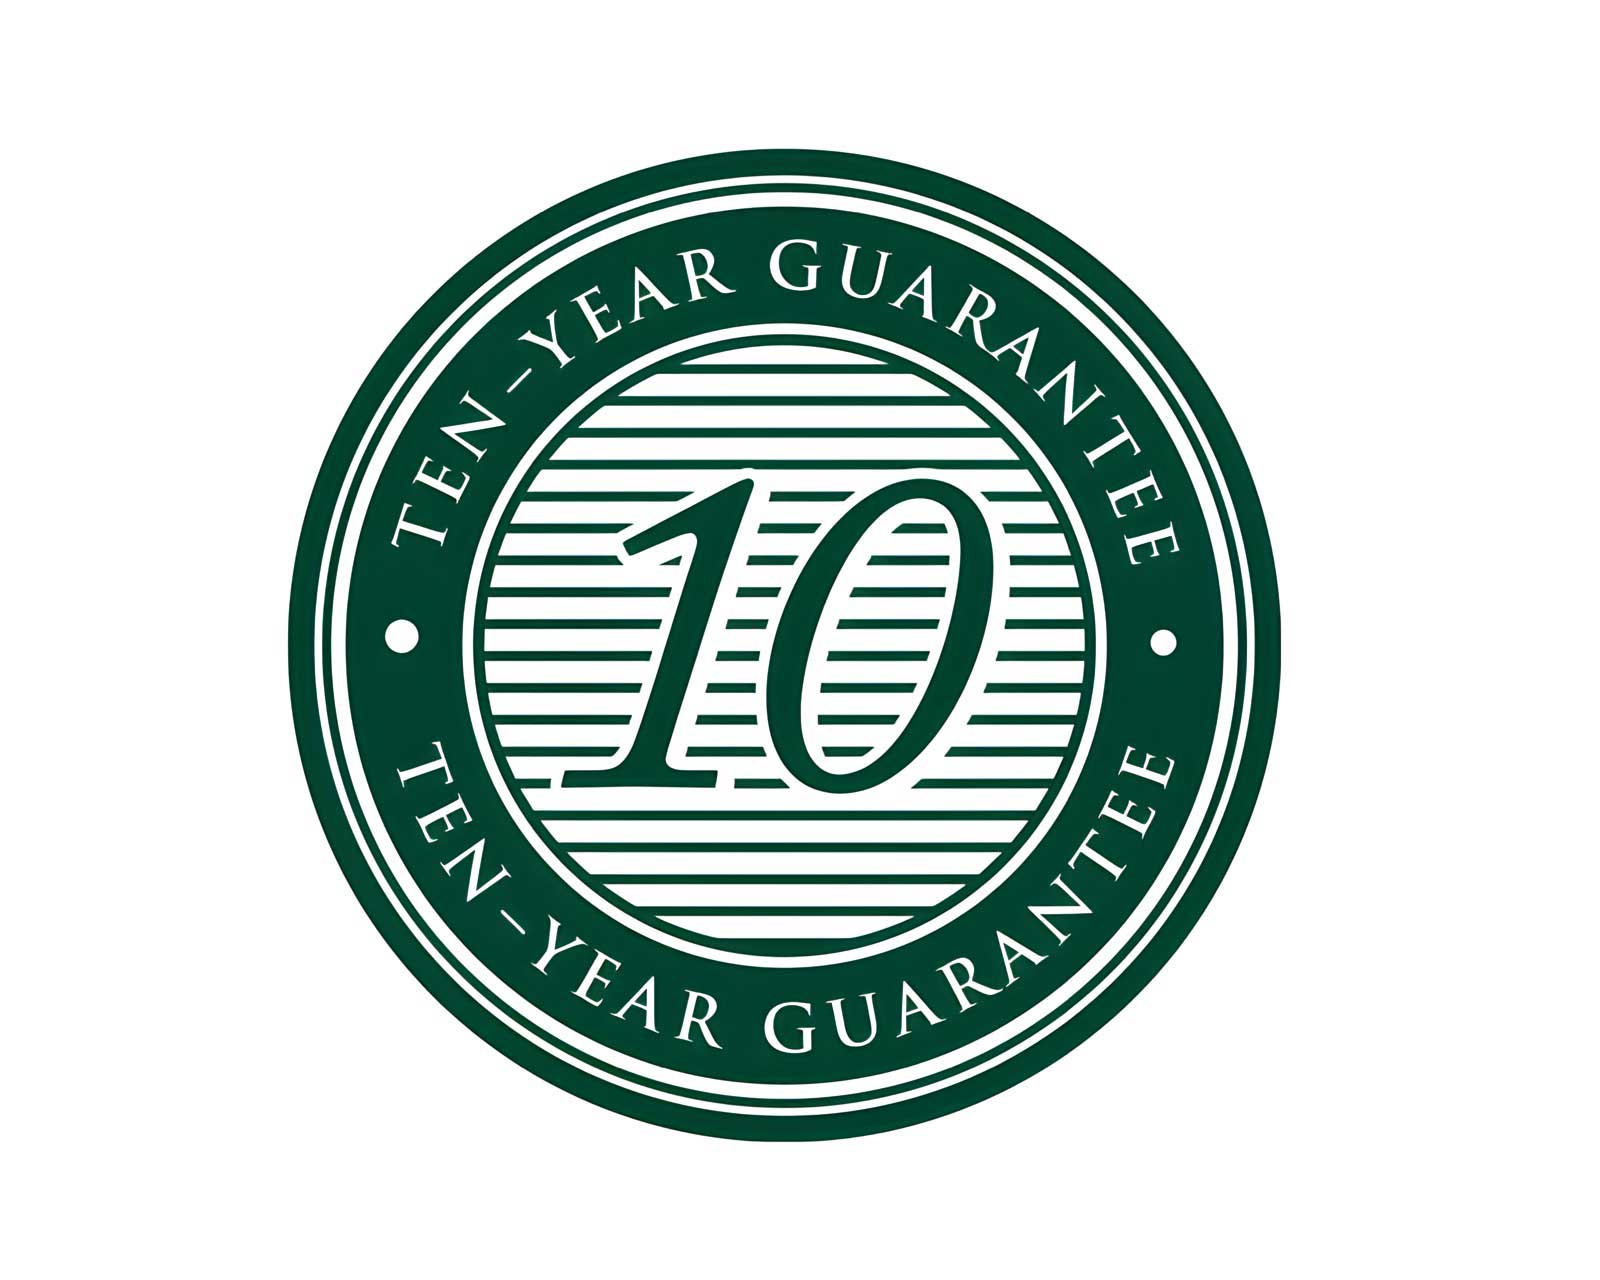 Burgon and Ball 10 year guarantee